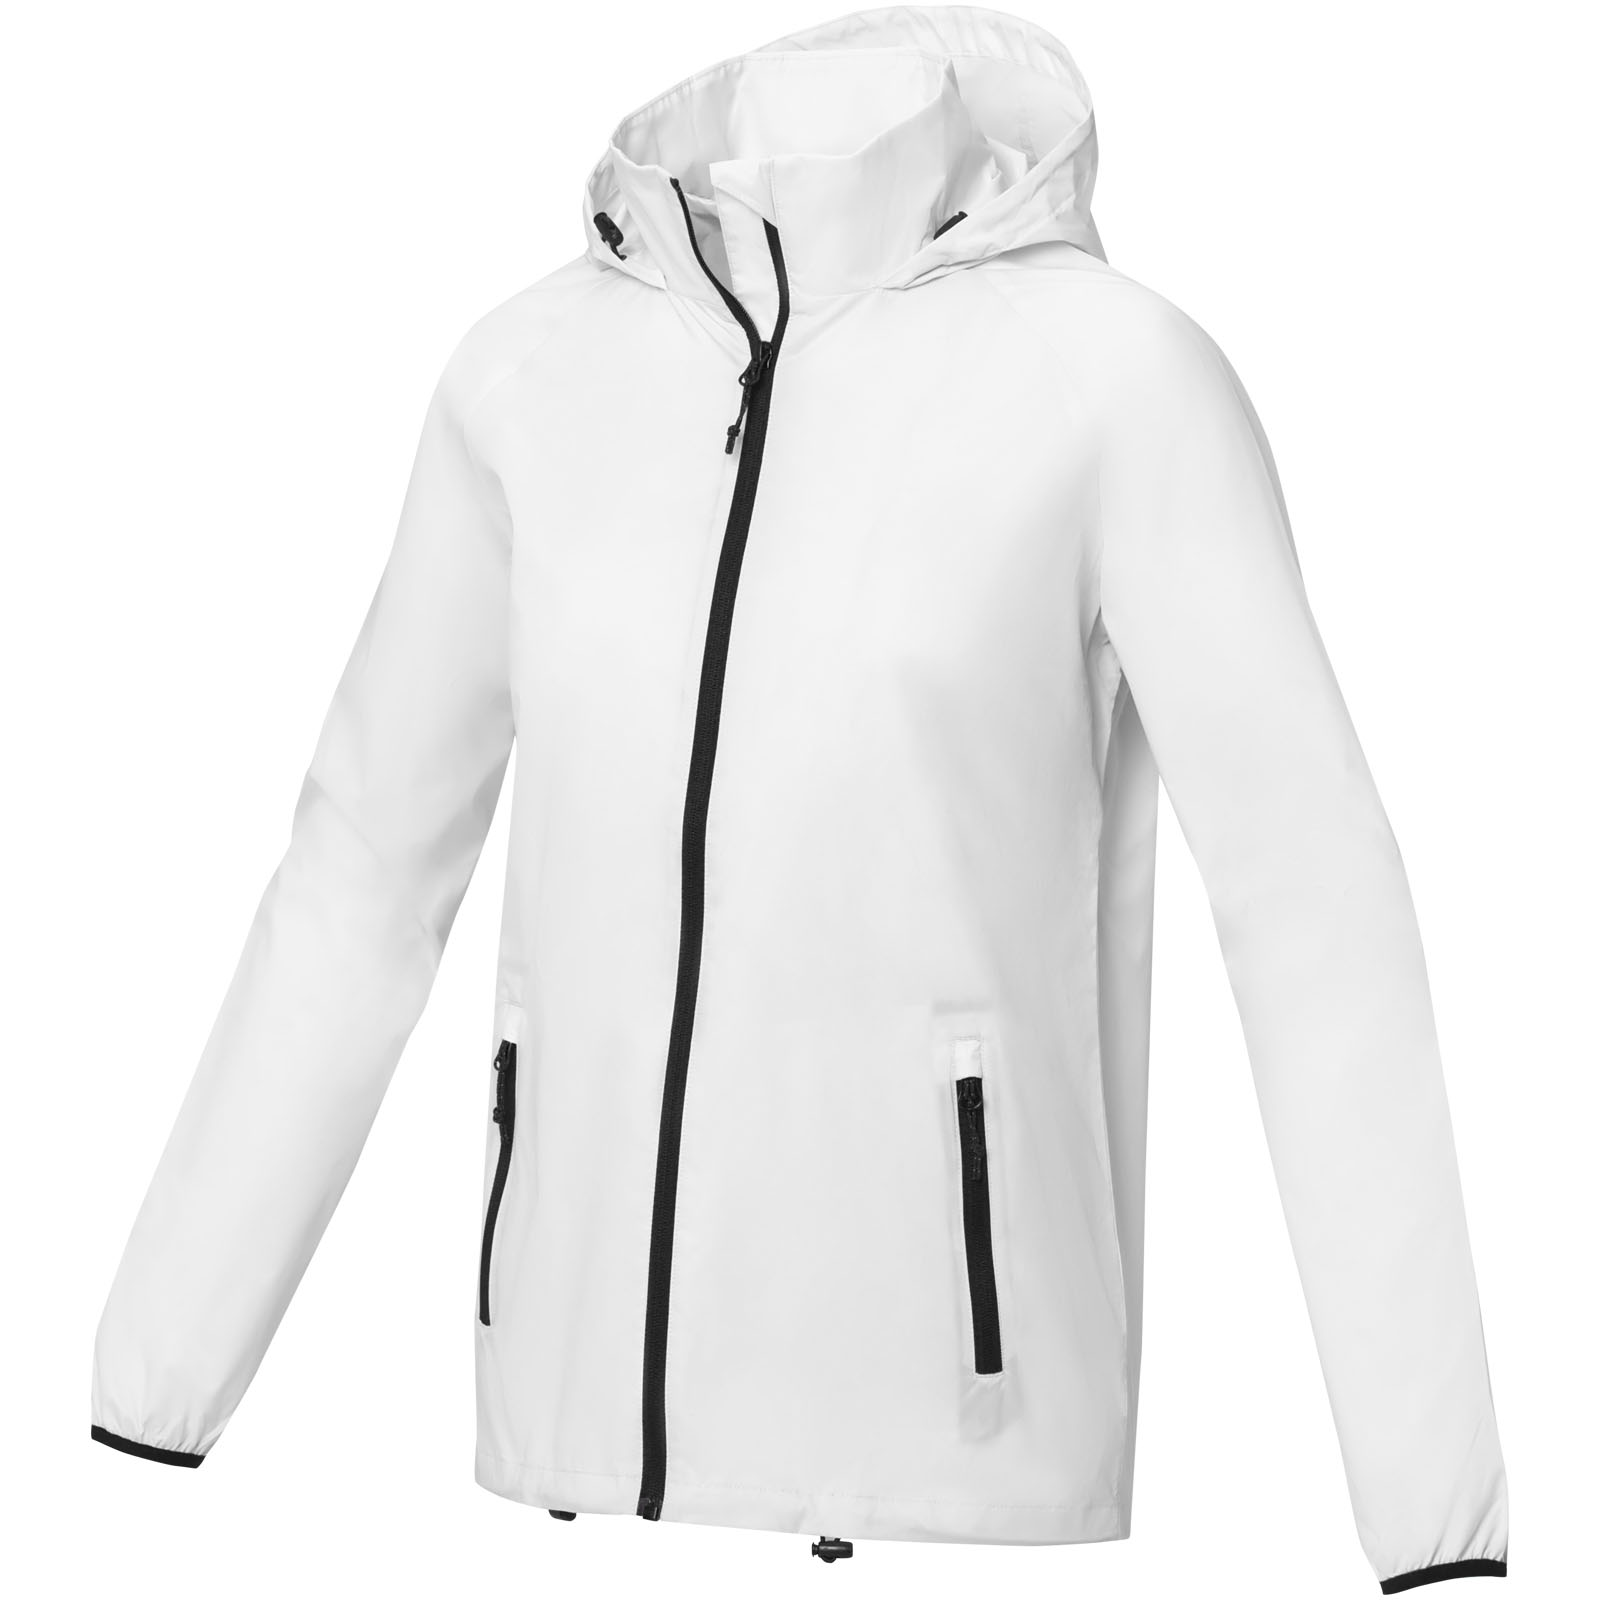 Jackets - Dinlas women's lightweight jacket